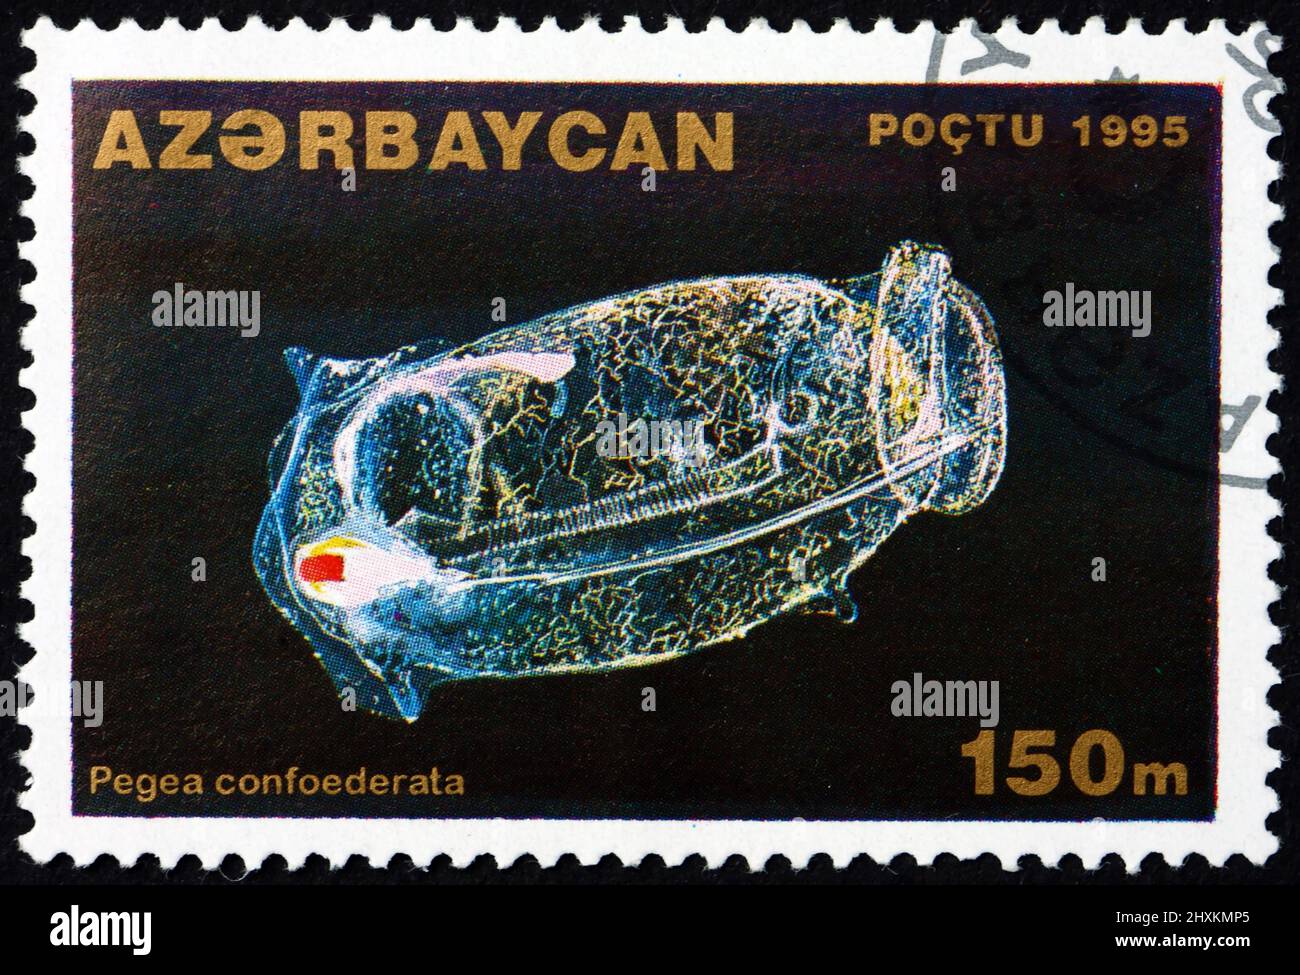 AZERBAIJAN - CIRCA 1995: a stamp printed in Azerbaijan shows pegea confoederata, a marine invertebrate animal, circa 1995 Stock Photo